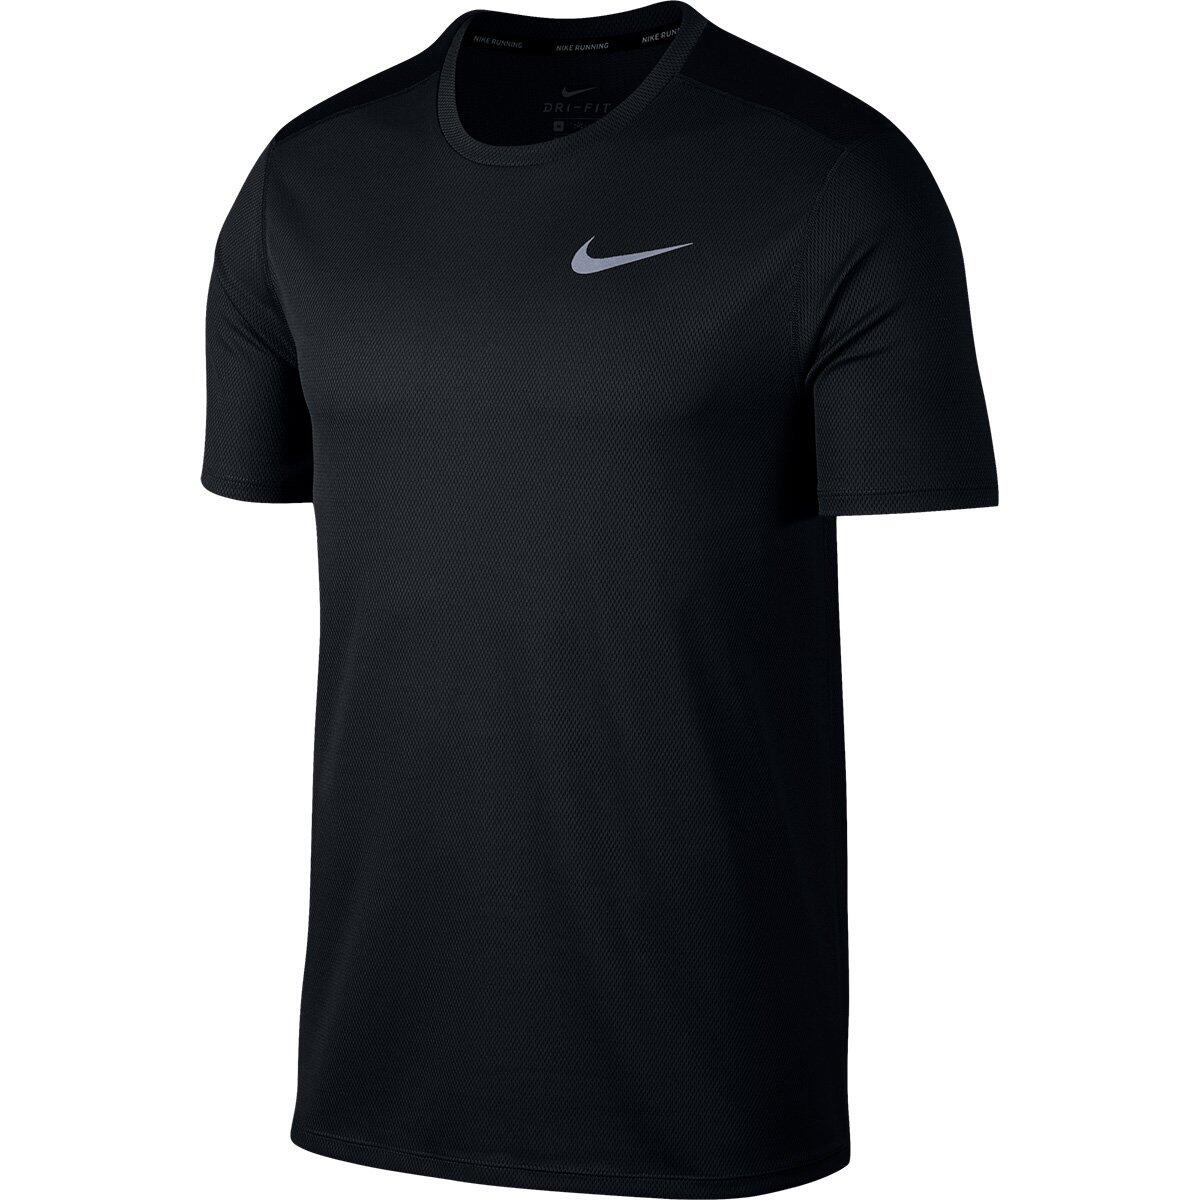 Camiseta Nike DRI-FIT Run Masculina - Preto